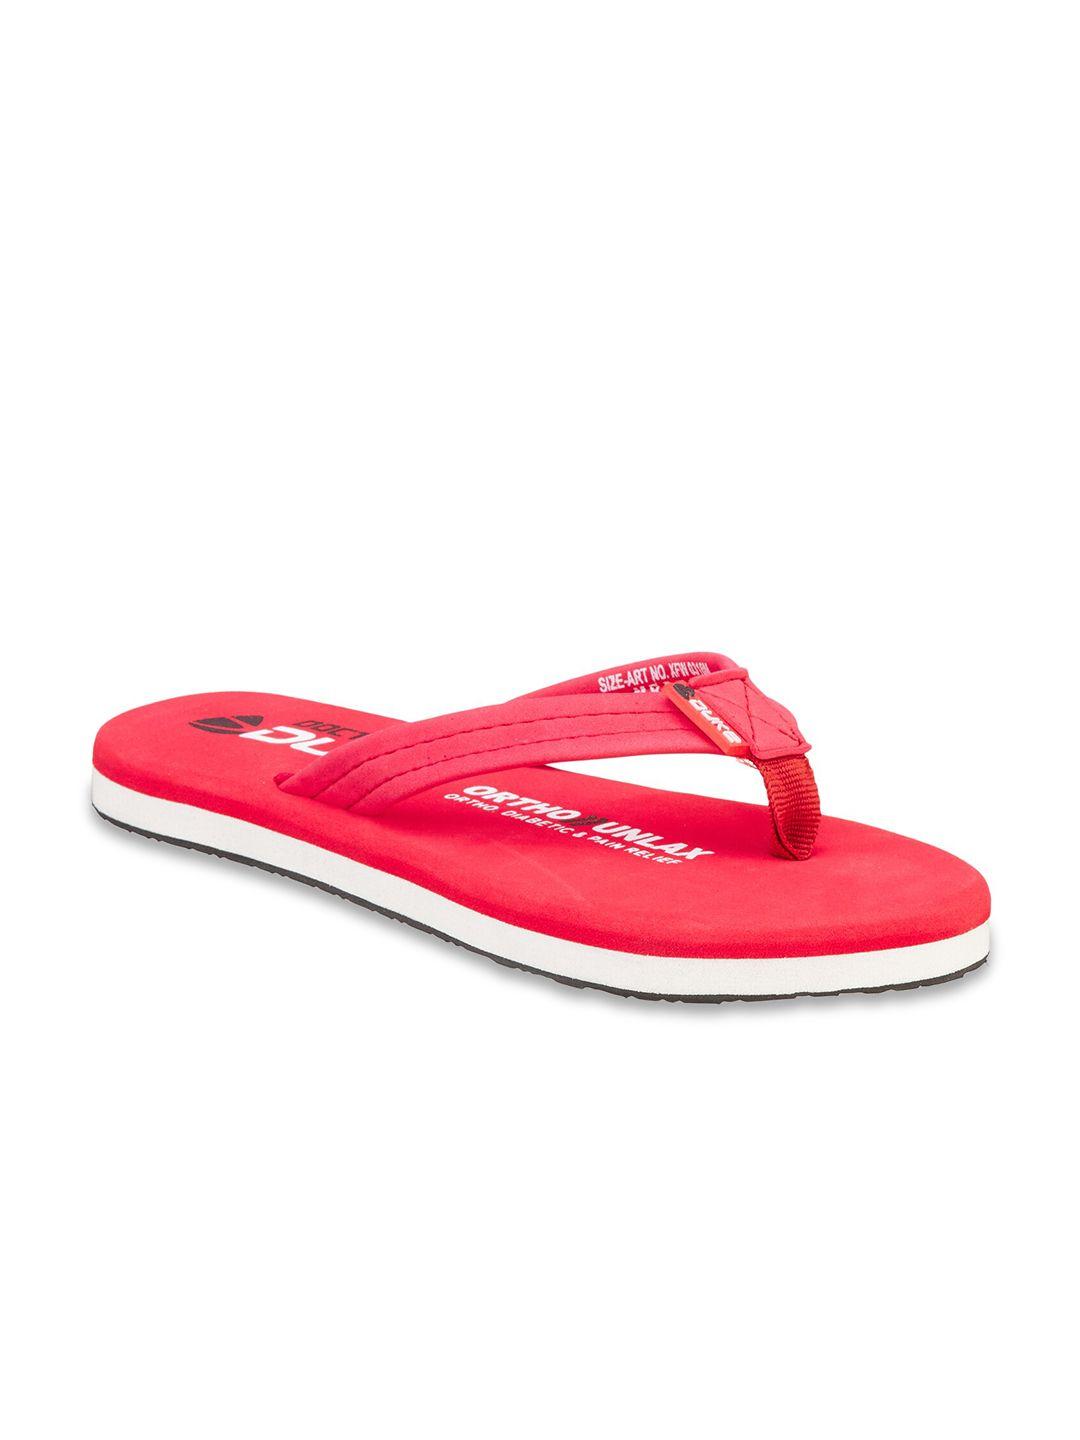 duke women red & white printed thong flip-flops